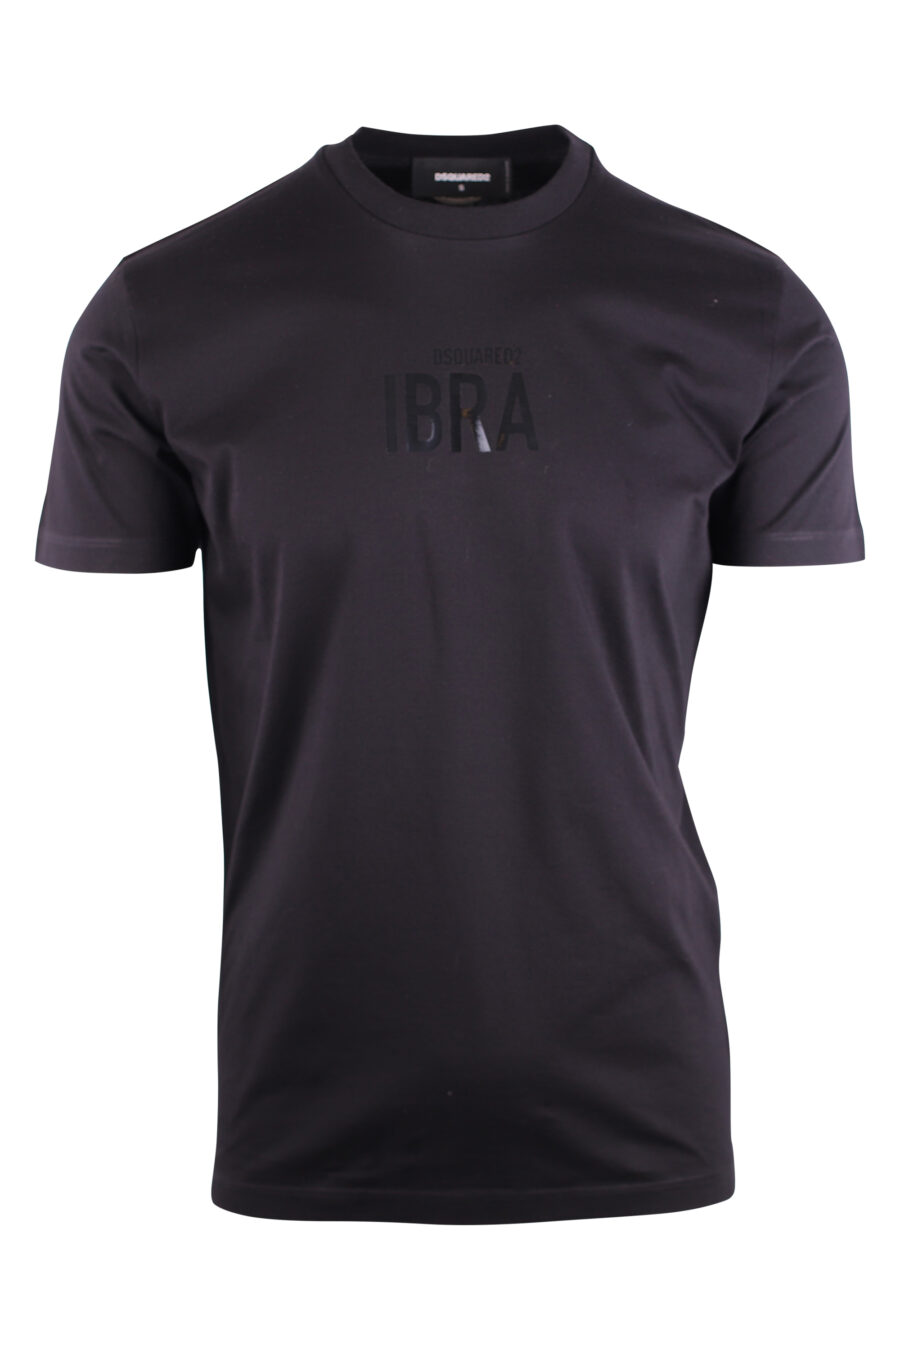 Schwarzes T-Shirt mit einfarbigem "ibra"-Logo - IMG 3109